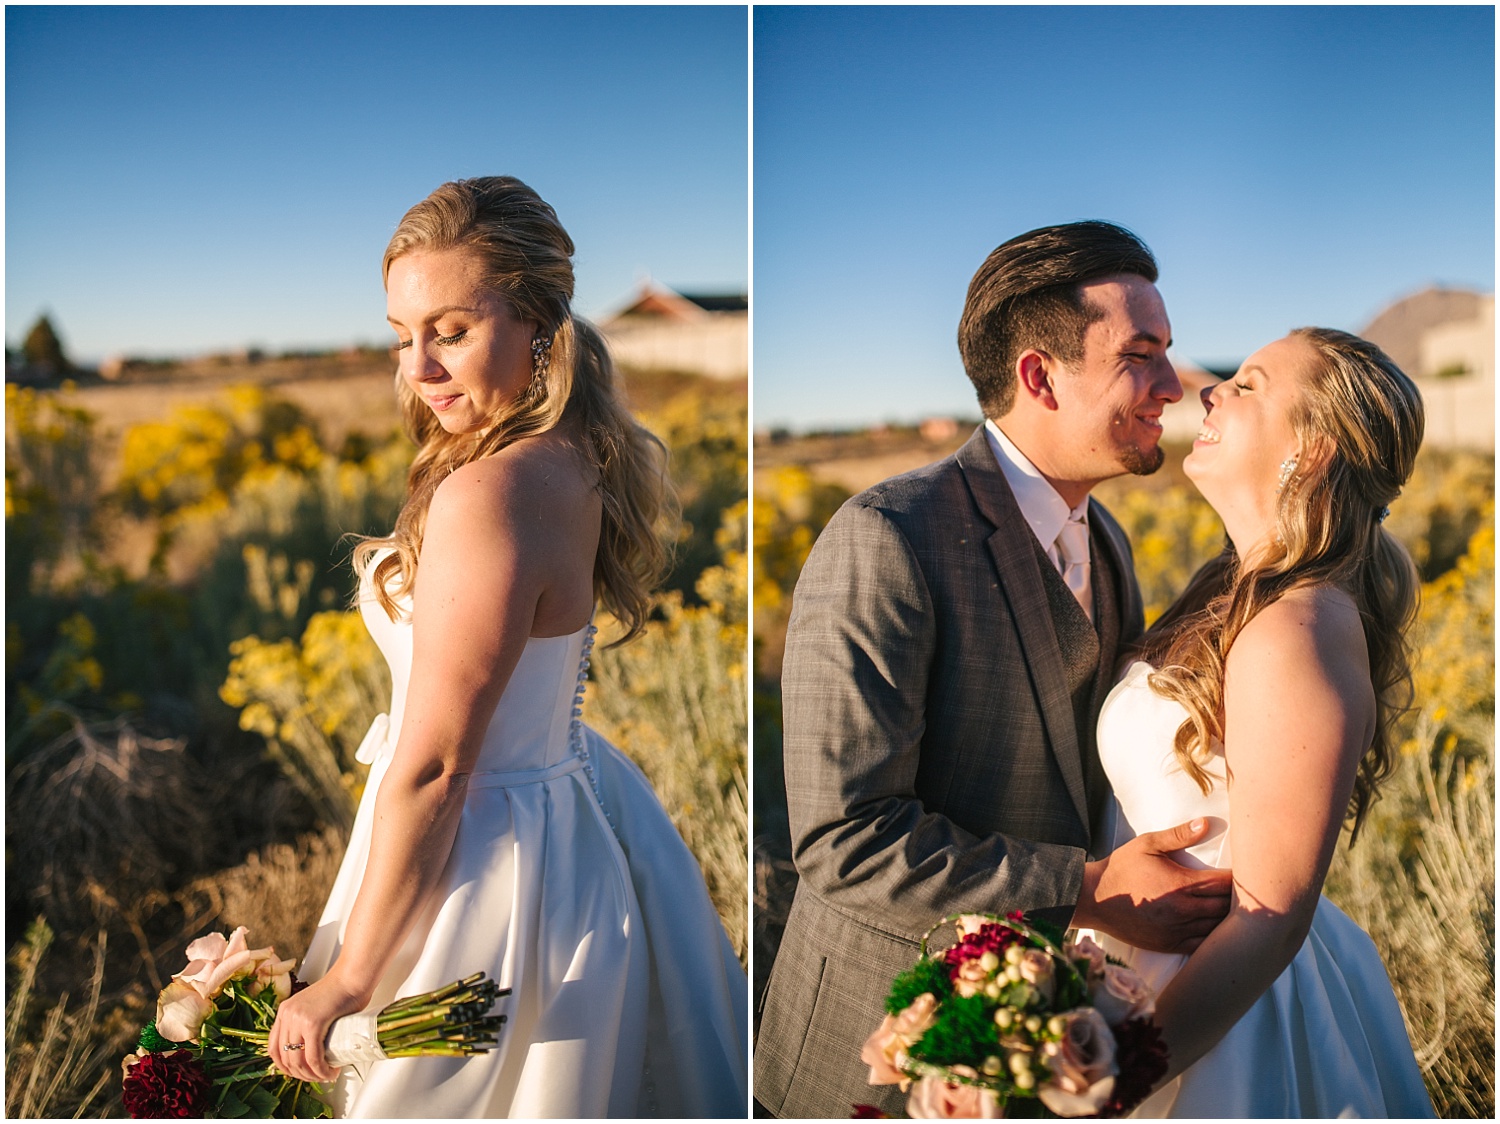 Bridal portrait at golden hour in Albuquerque New Mexico | Dress by Ann Matthews